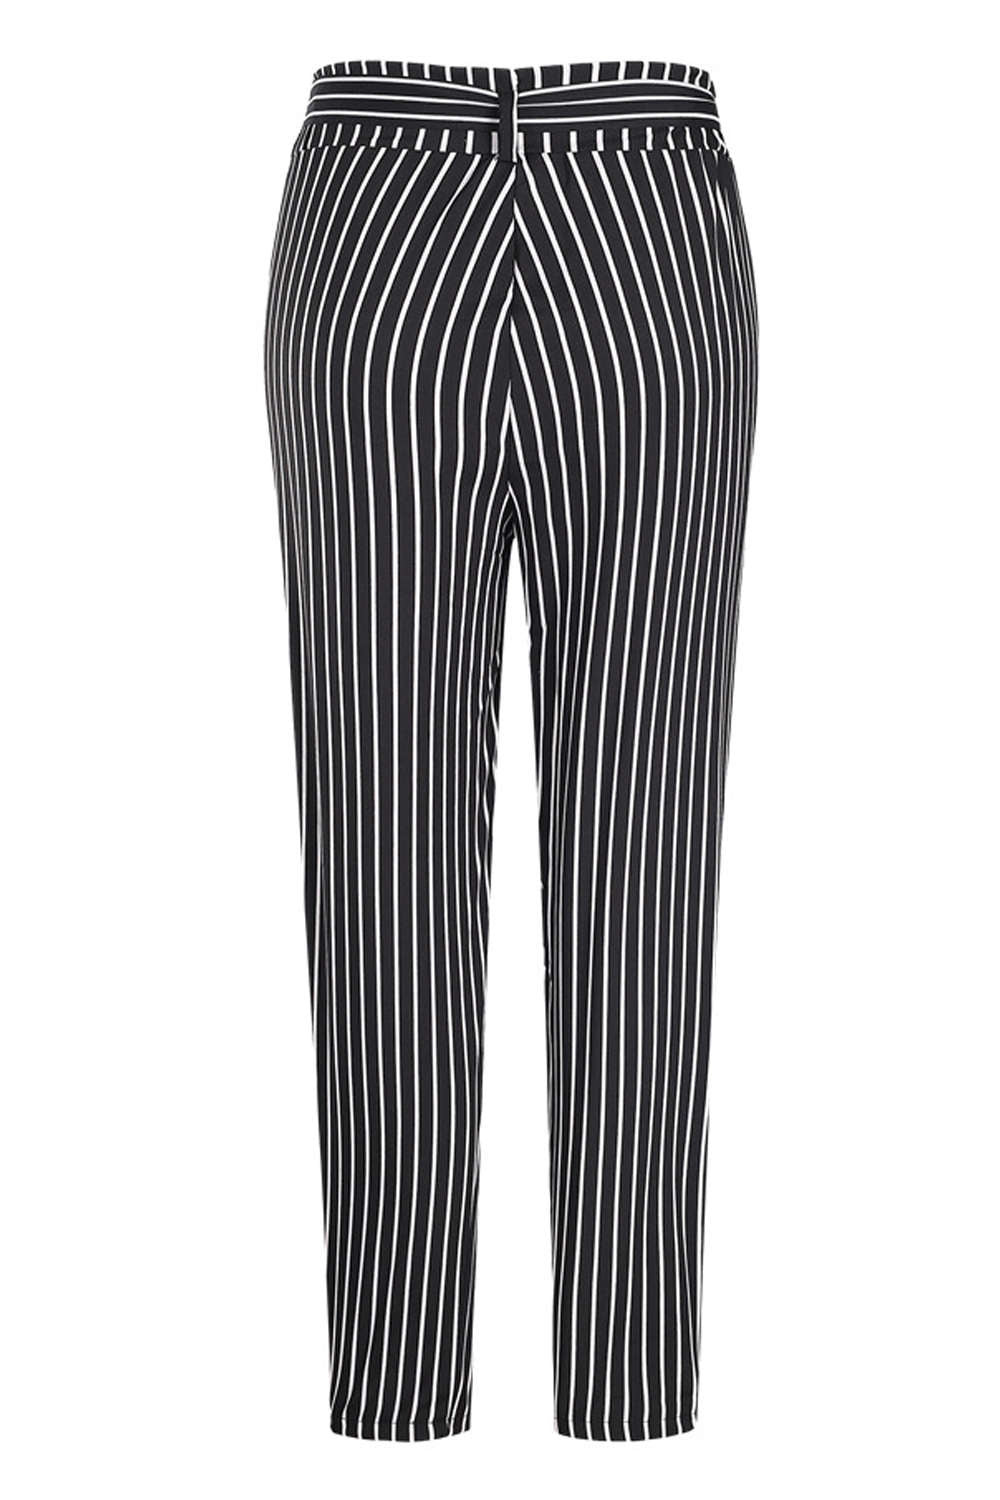 Iyasson Women's Striped High Waisted Pants